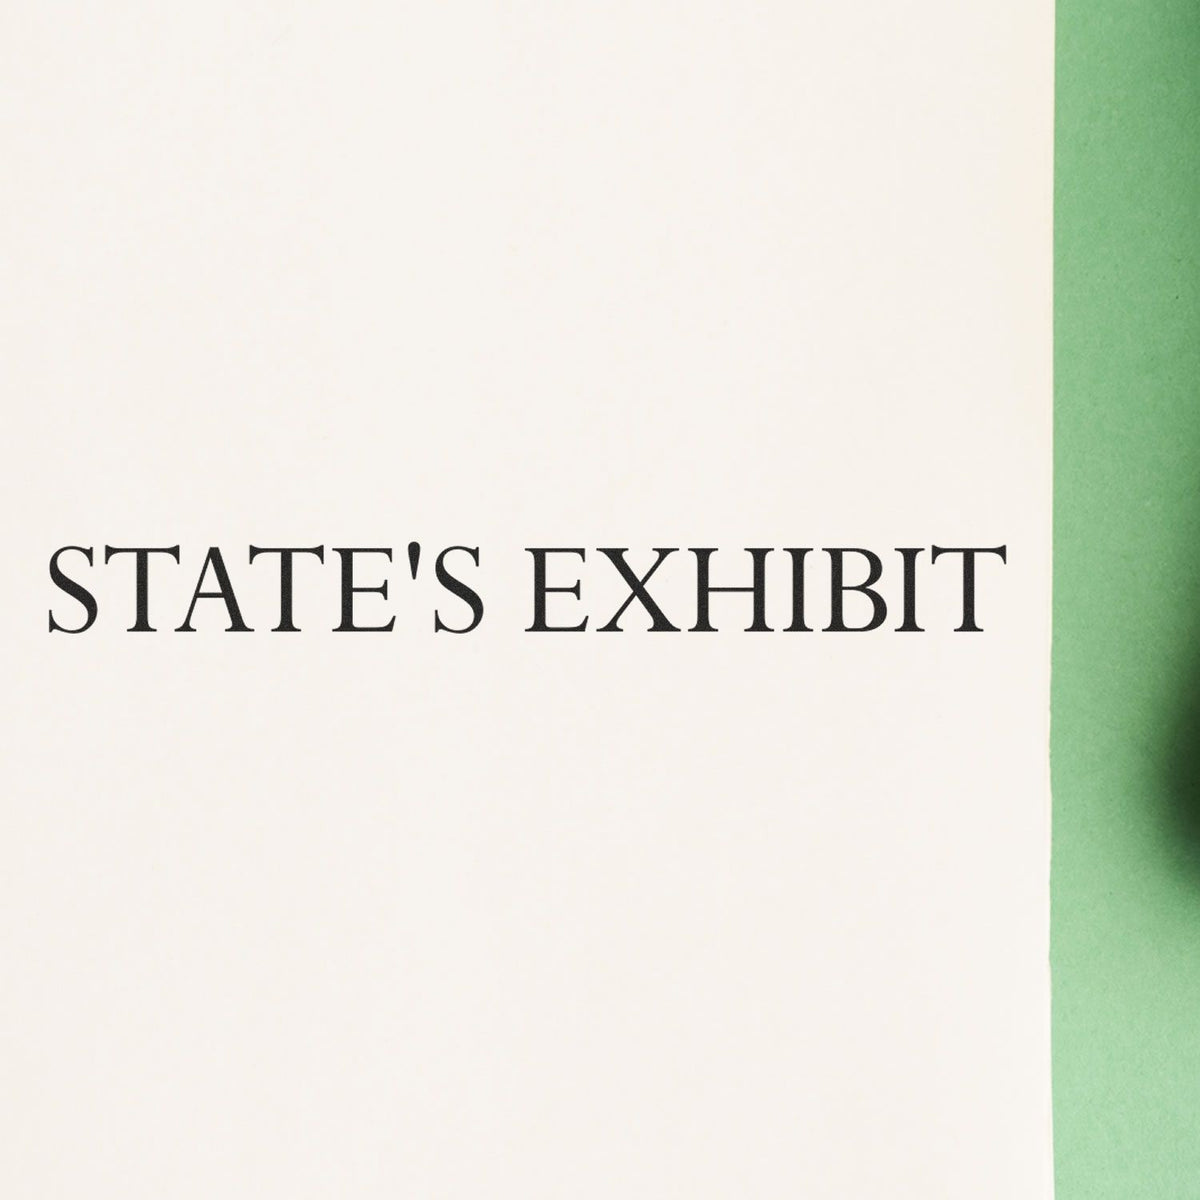 Large States Exhibit Rubber Stamp Lifestyle Photo